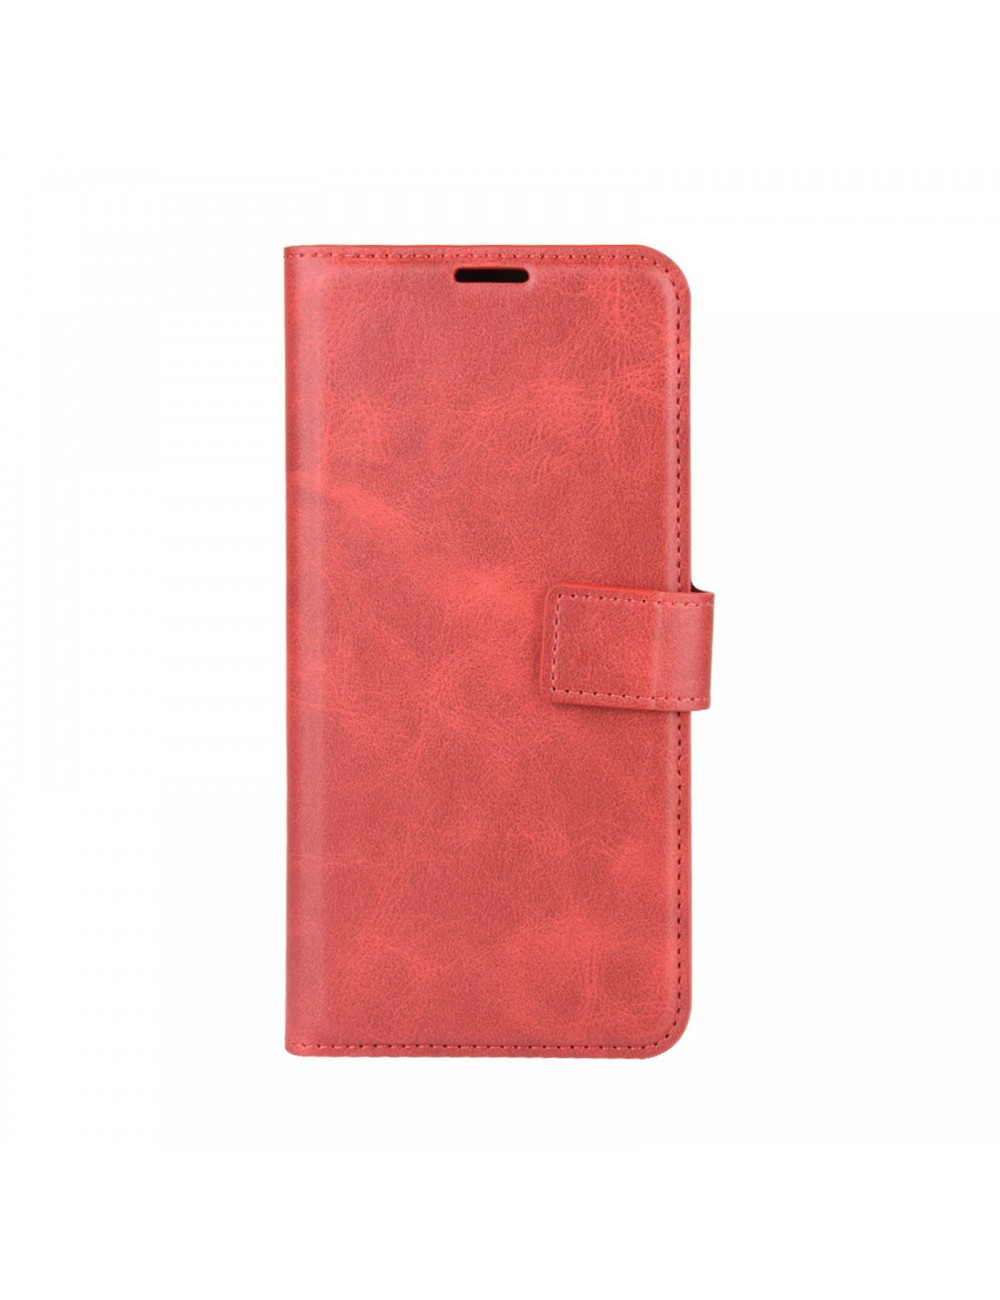 Samsung Galaxy S8 Plus portemonnee hoesje, rood, goedkoop, PU Leer, pasjes